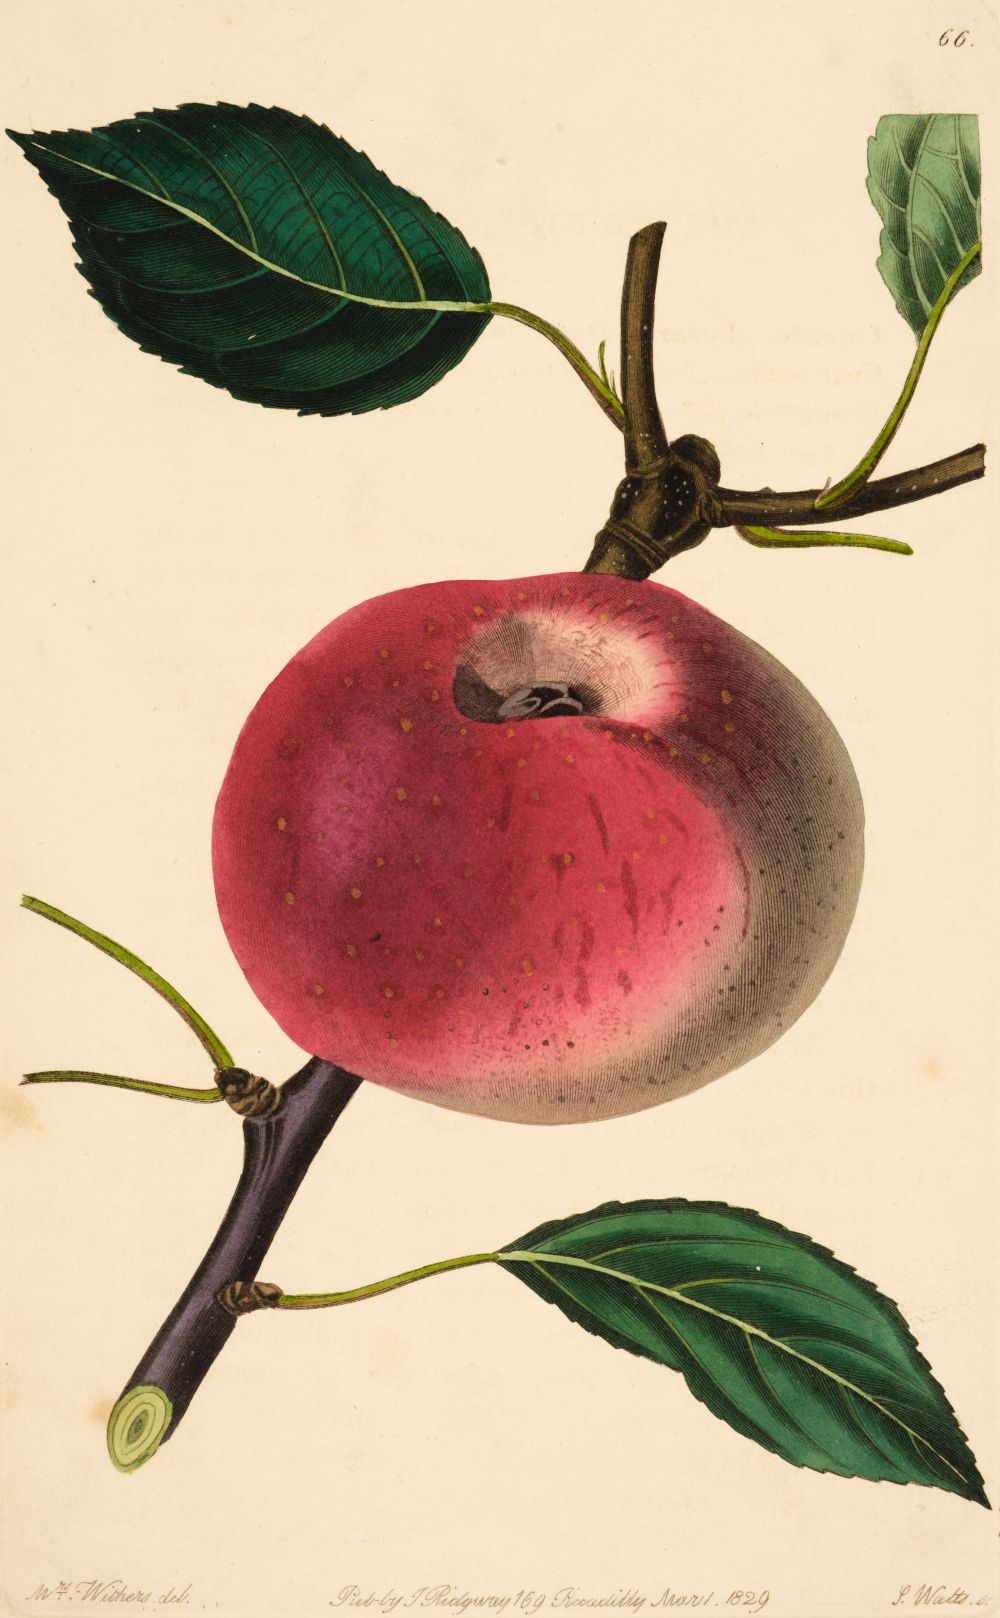 * Pomological Magazine. A collection of 46 plates of Fruit, James Ridgeway, circa 1840